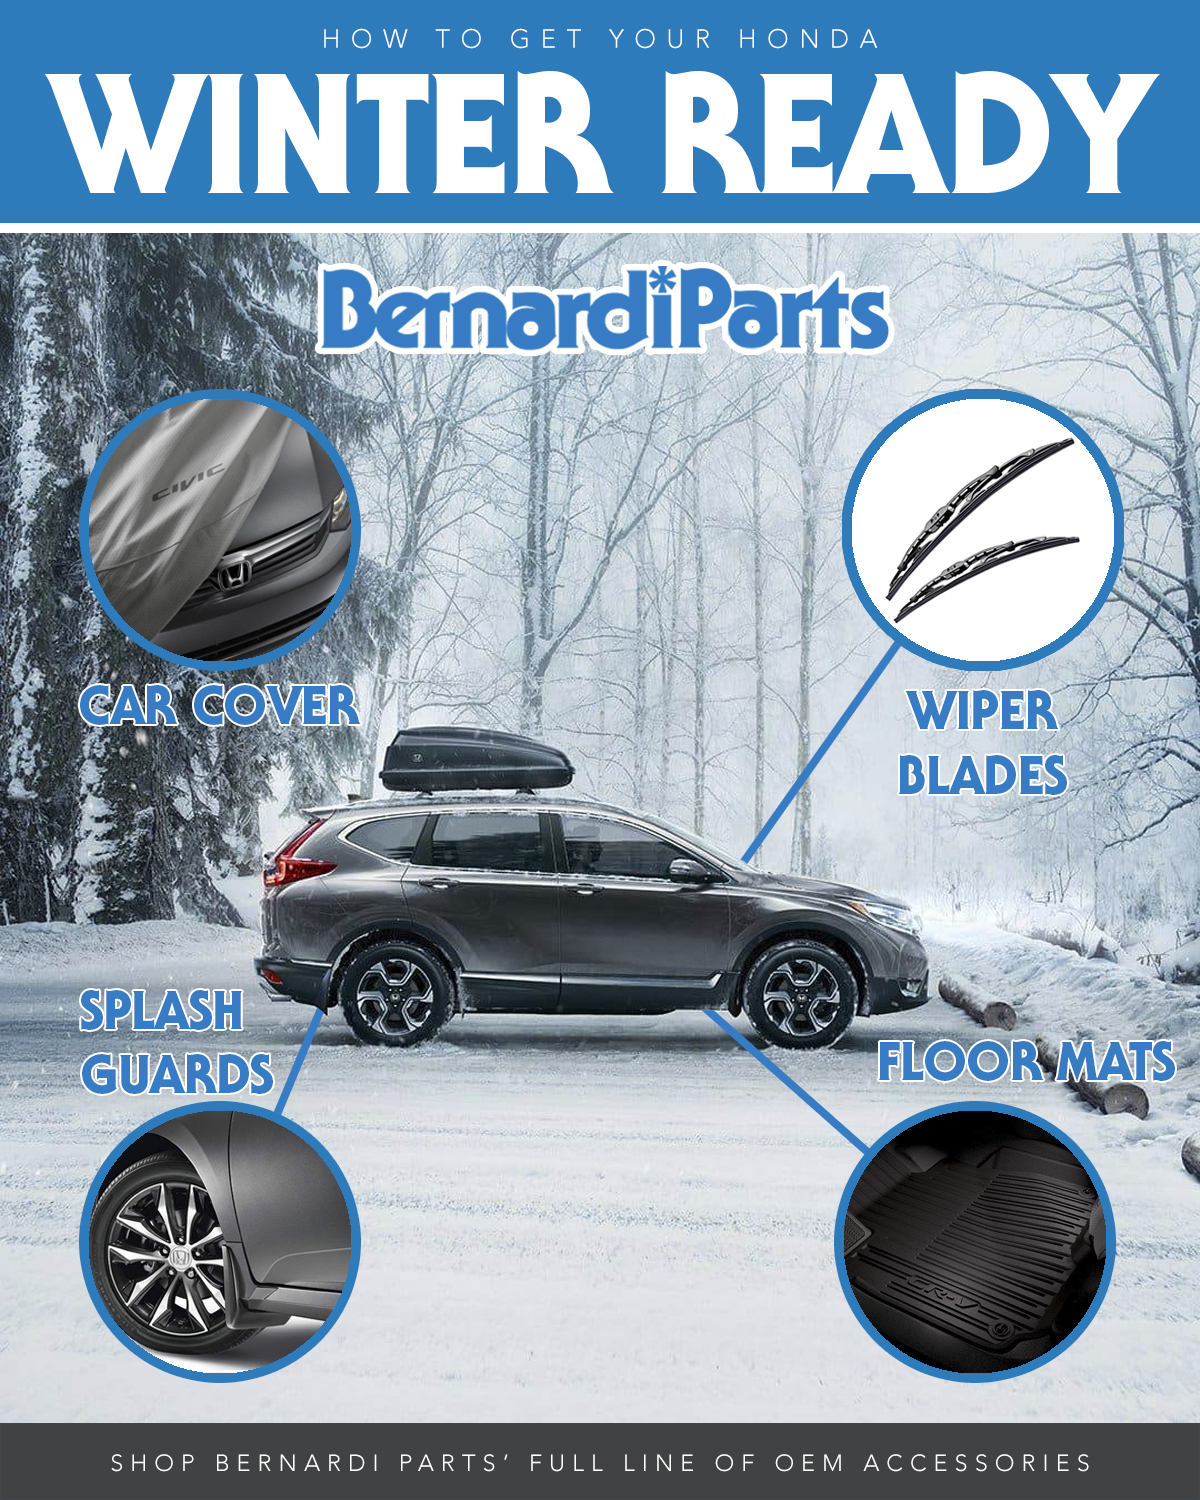 Get Your Honda Winter Ready